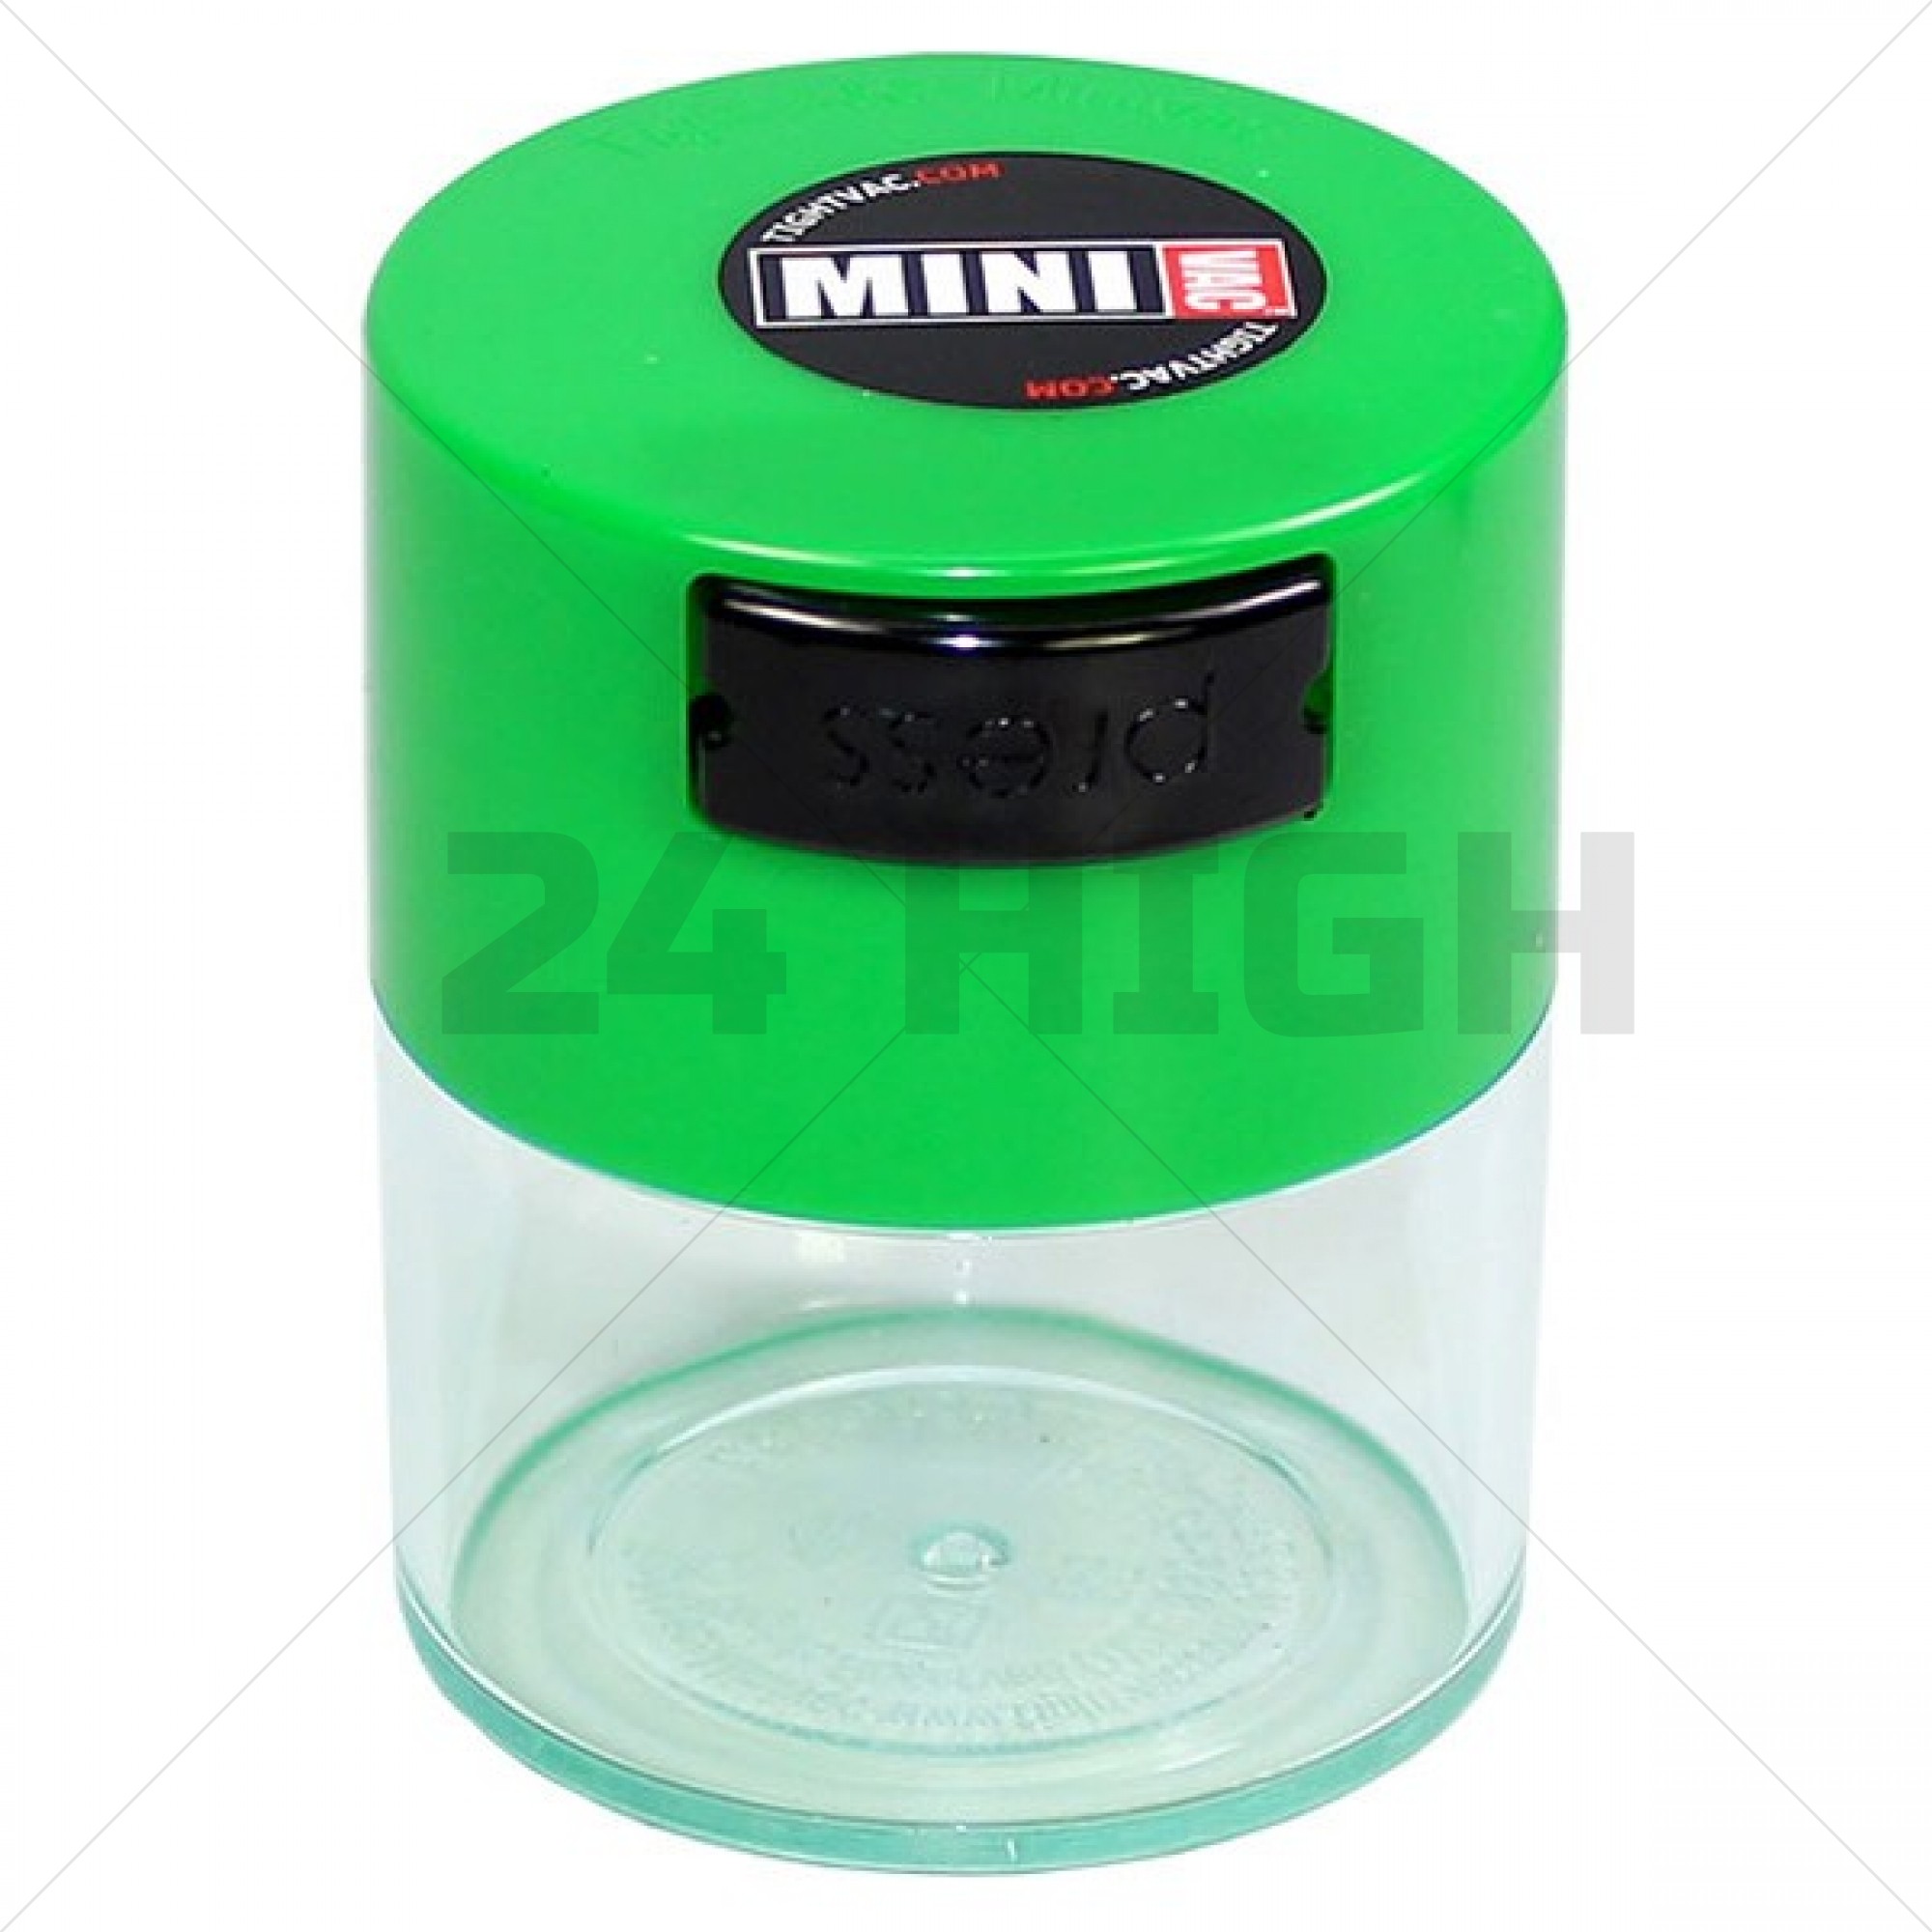 Tightvac 0,12 litros Mini transparente tapa verde claro